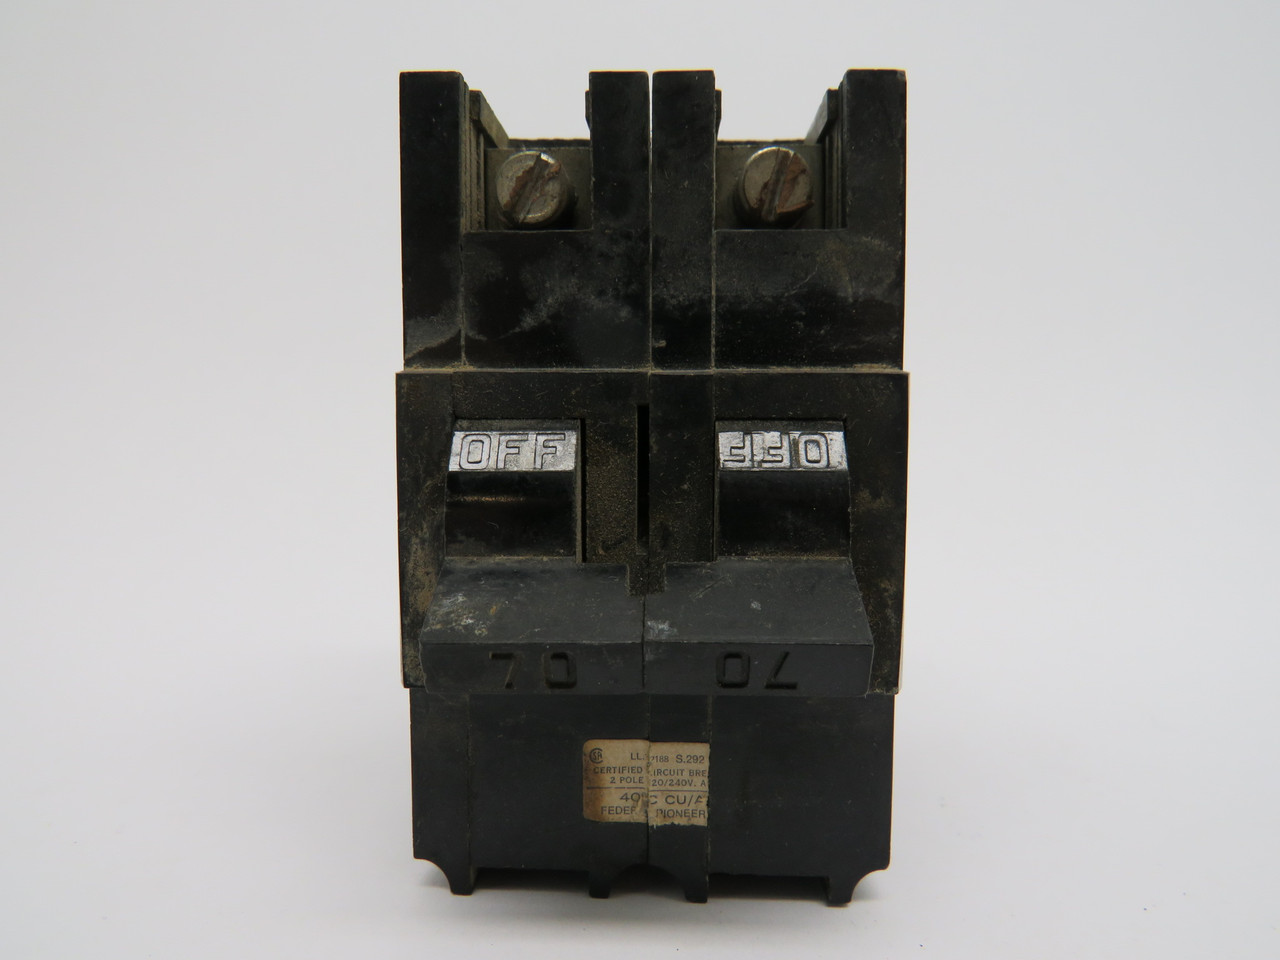 Federal Pioneer NB270 Miniature Circuit Breaker 70A 120/240V 2P USED